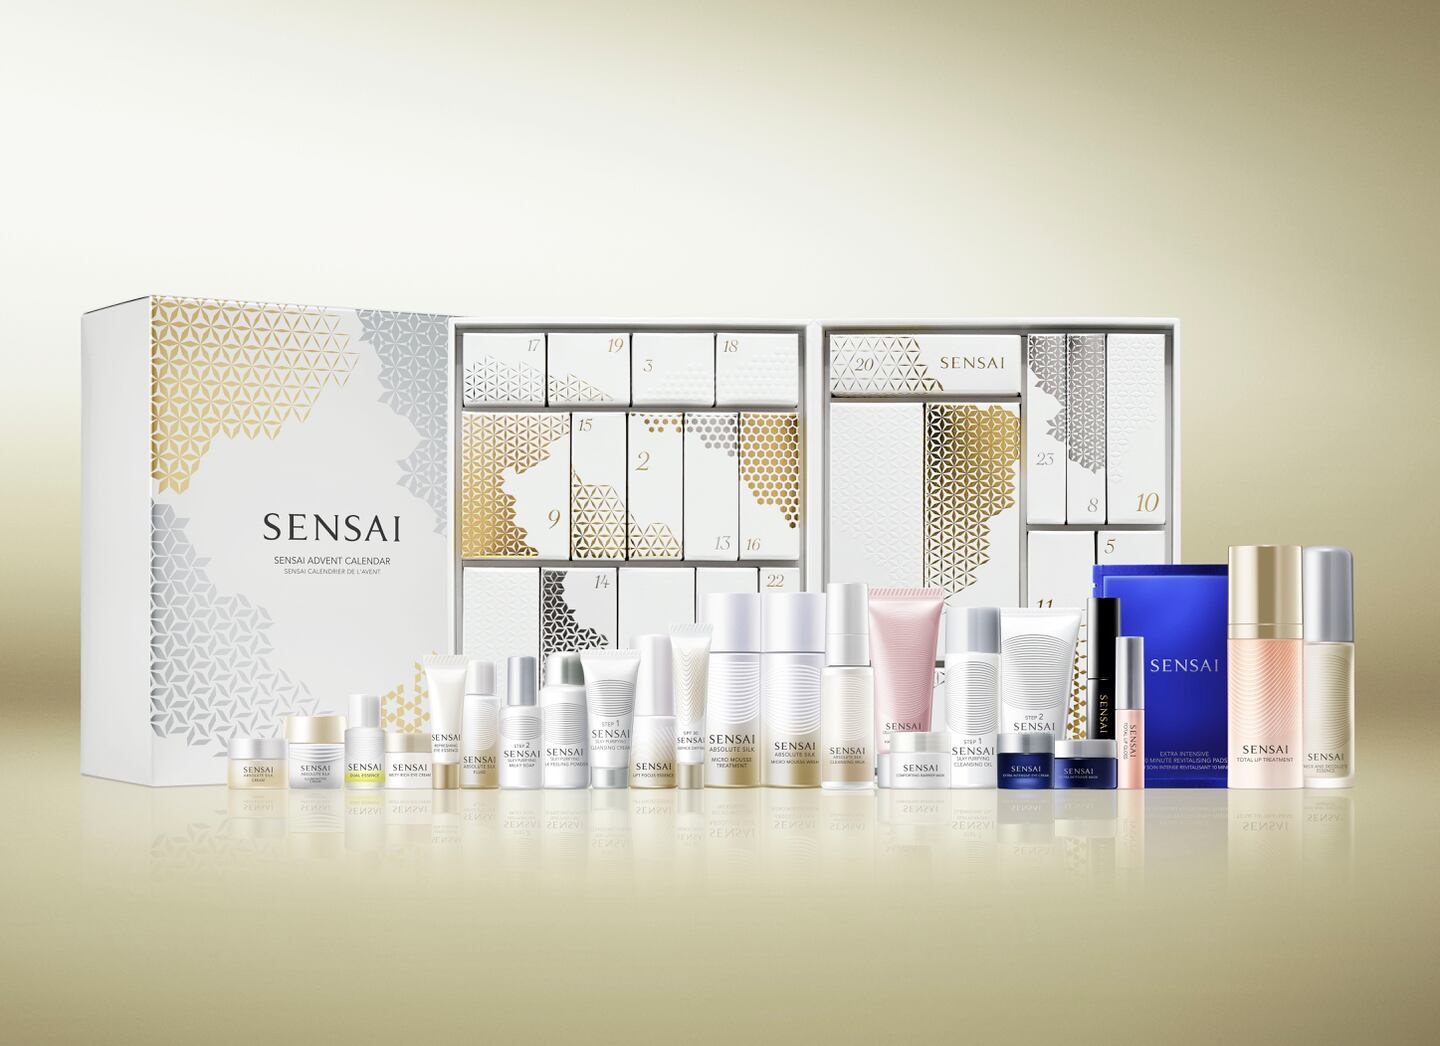 An advertisement for Japanese  beauty group Kao Corporation's luxury brand Sensai.